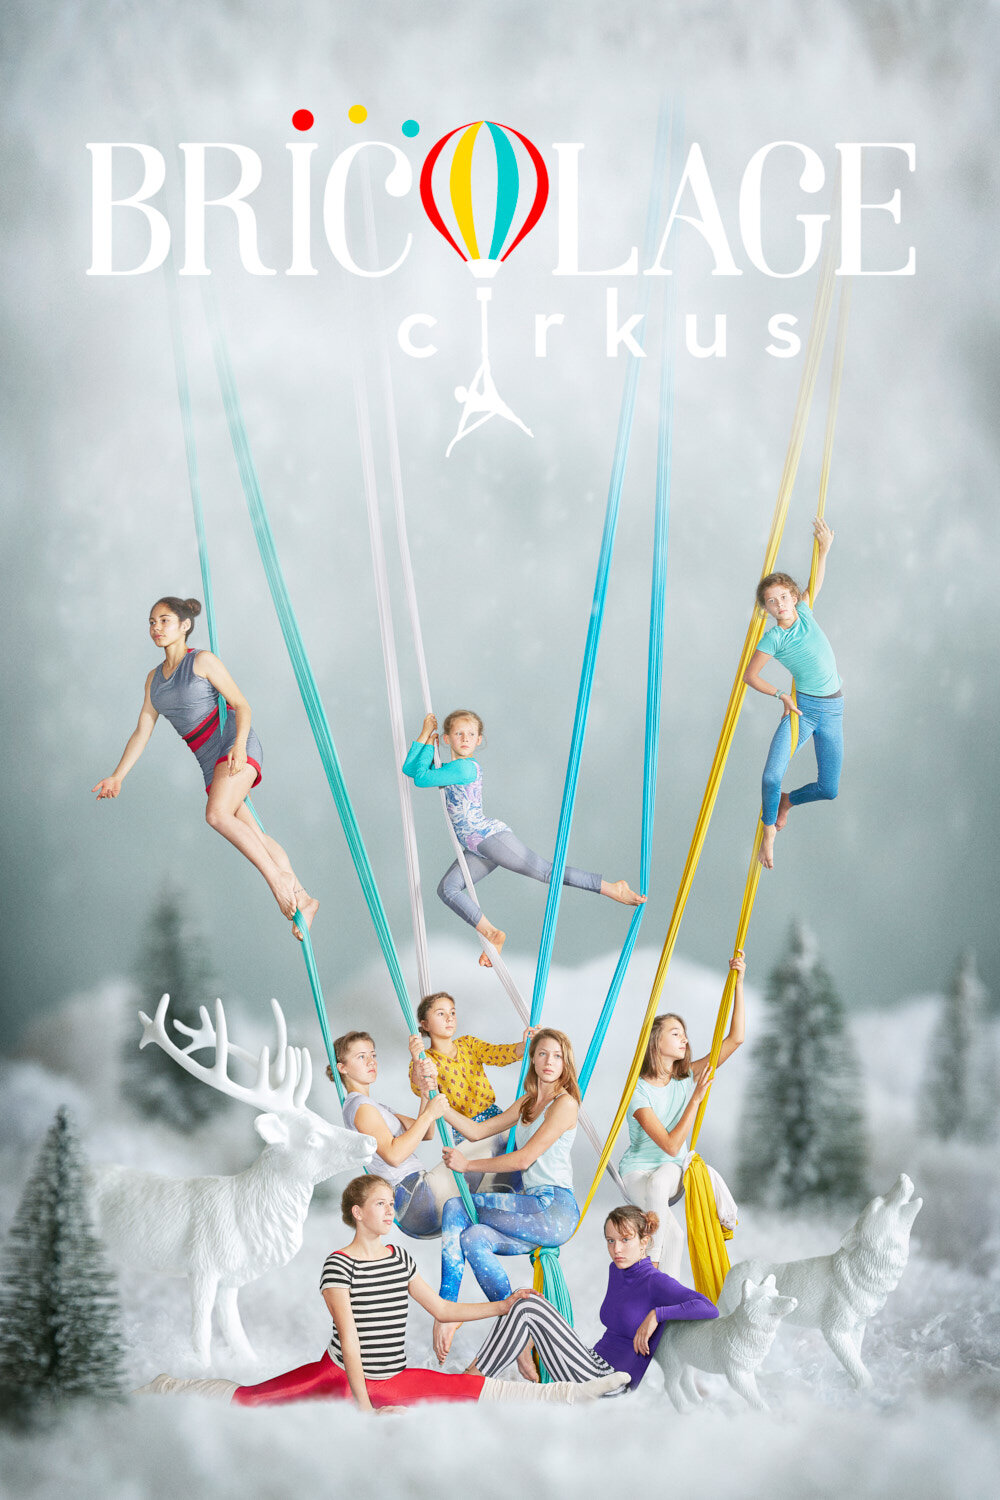 entertainer photographer Hanna Agar creates a winter scene advertising Bricolage Cirkus aerial arts performers